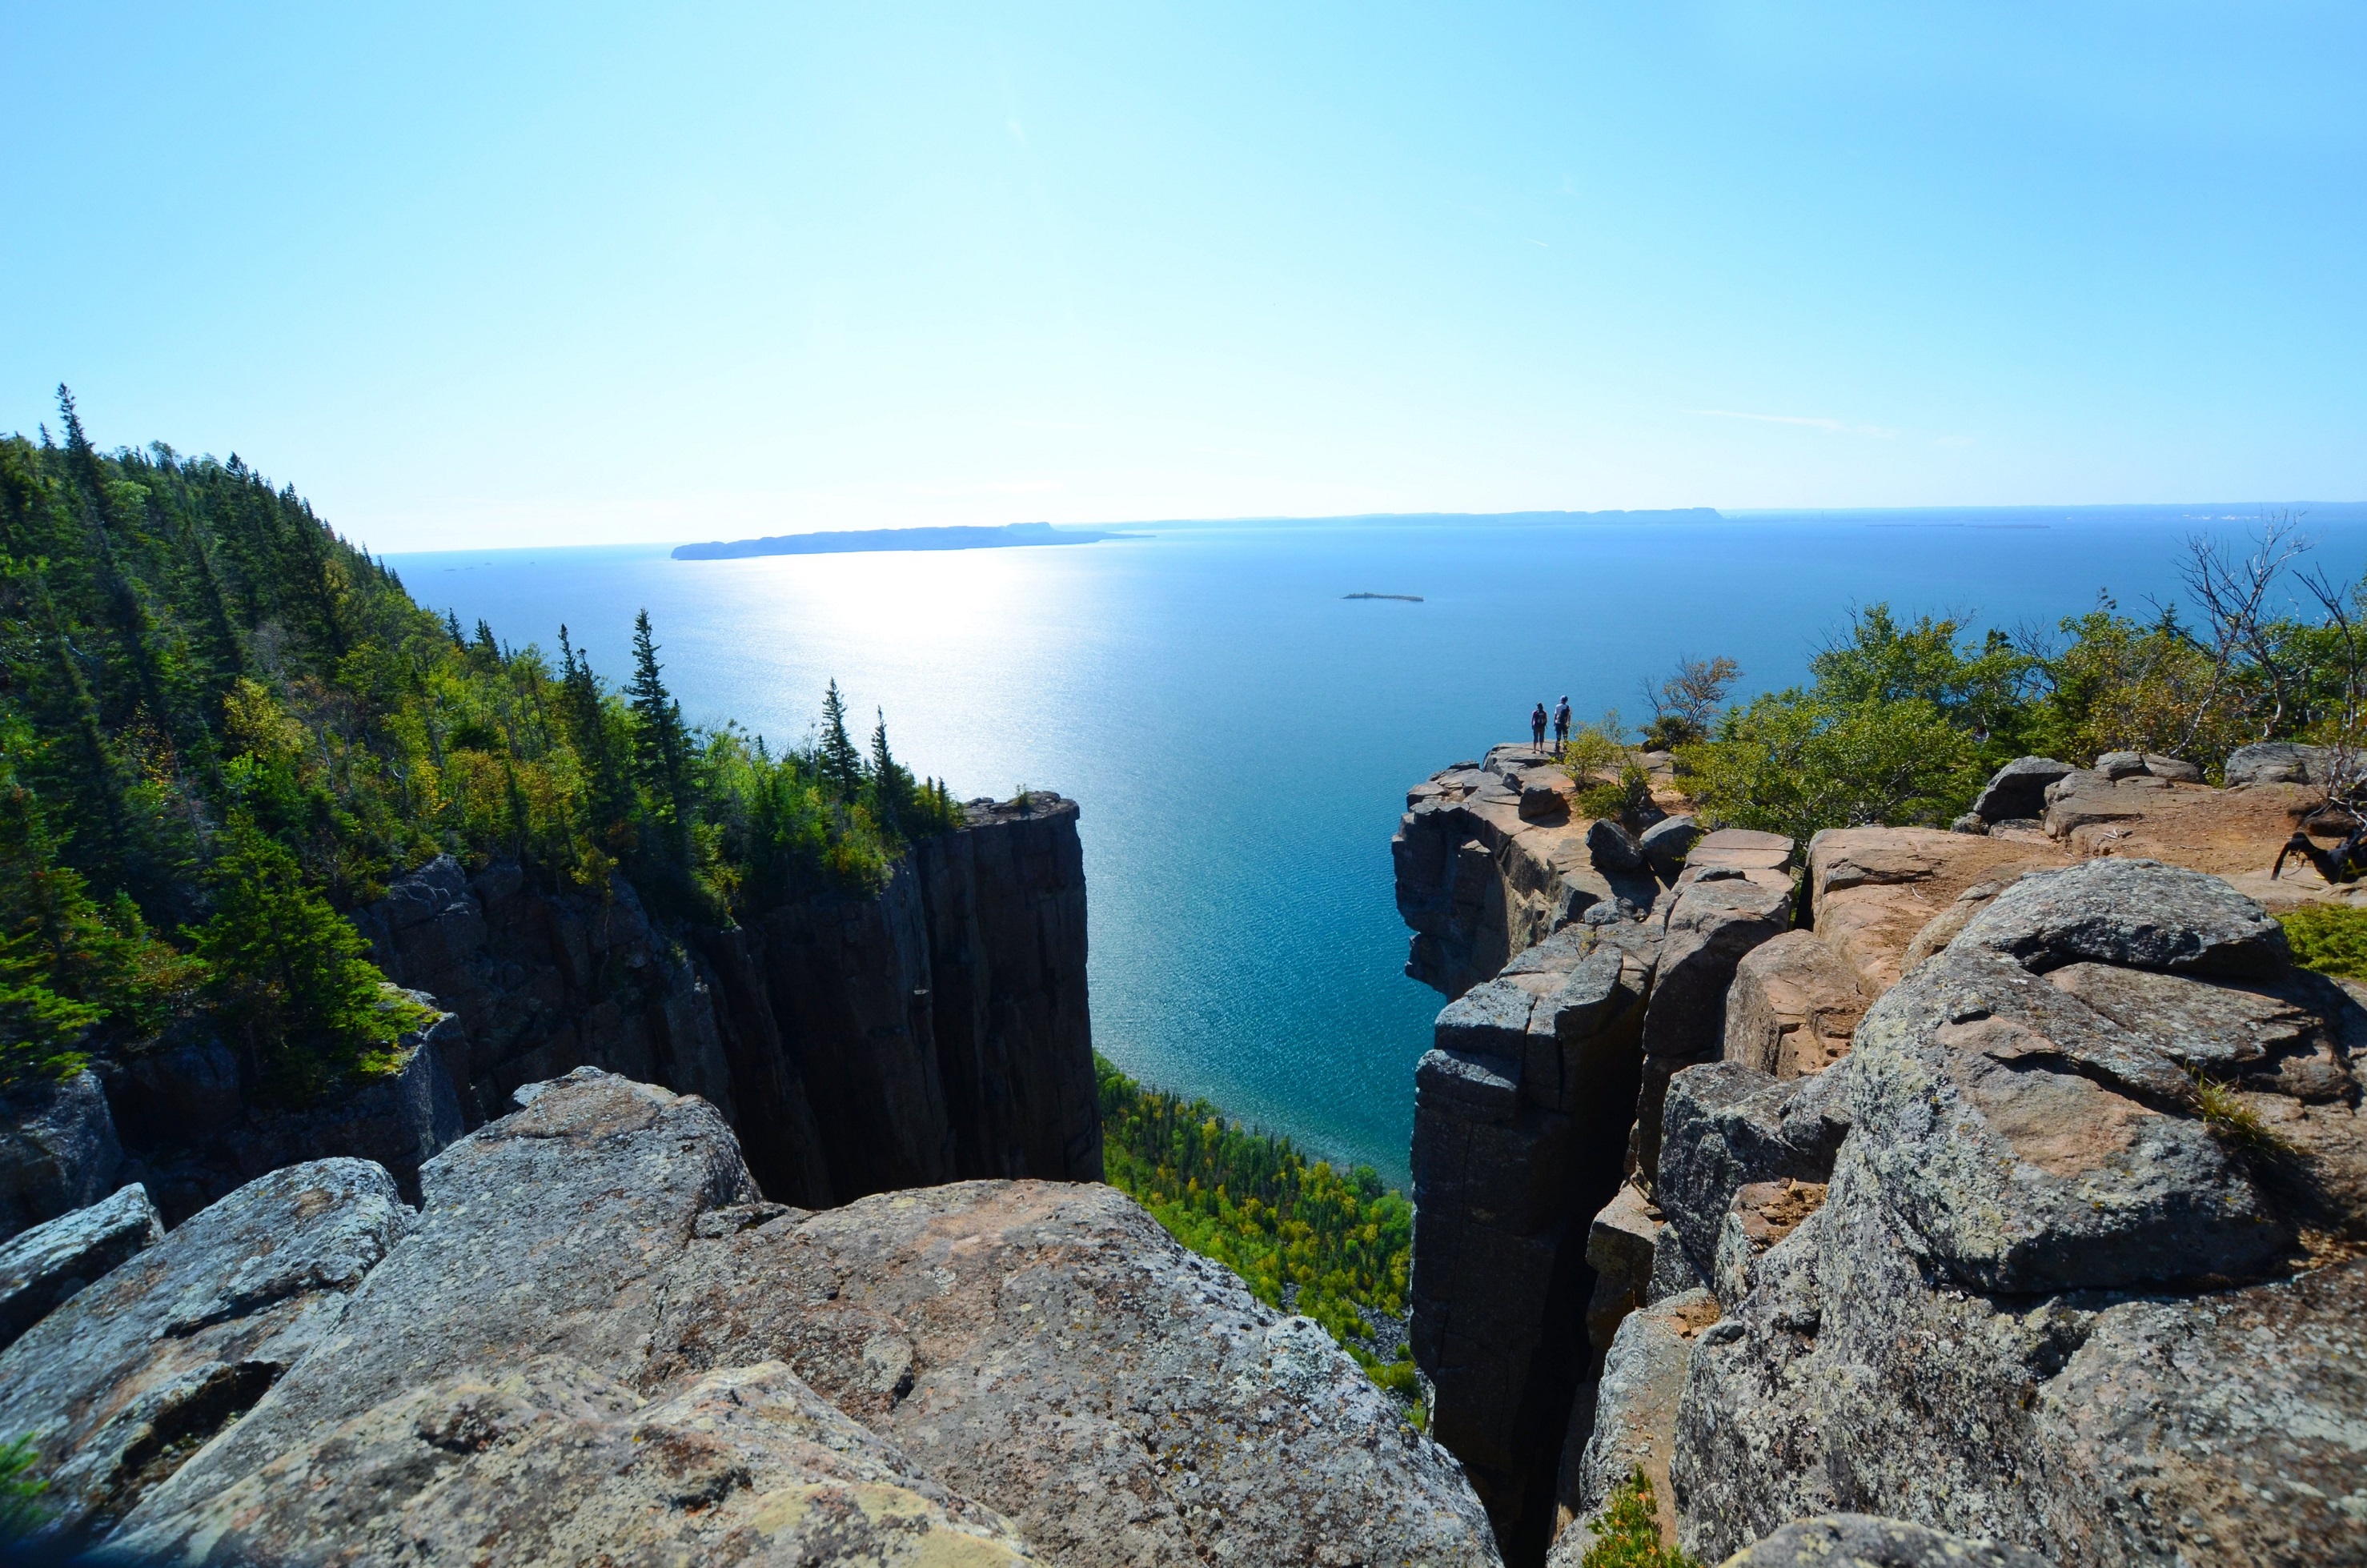 Какие озера входят в великие американские озера. Верхнее озеро (Lake Superior). Канада. Великие американские озёра верхнее Гурон Мичиган Эри Онтарио. Великие озёра Северной Америки озероонтарио. Озеро Супериор.